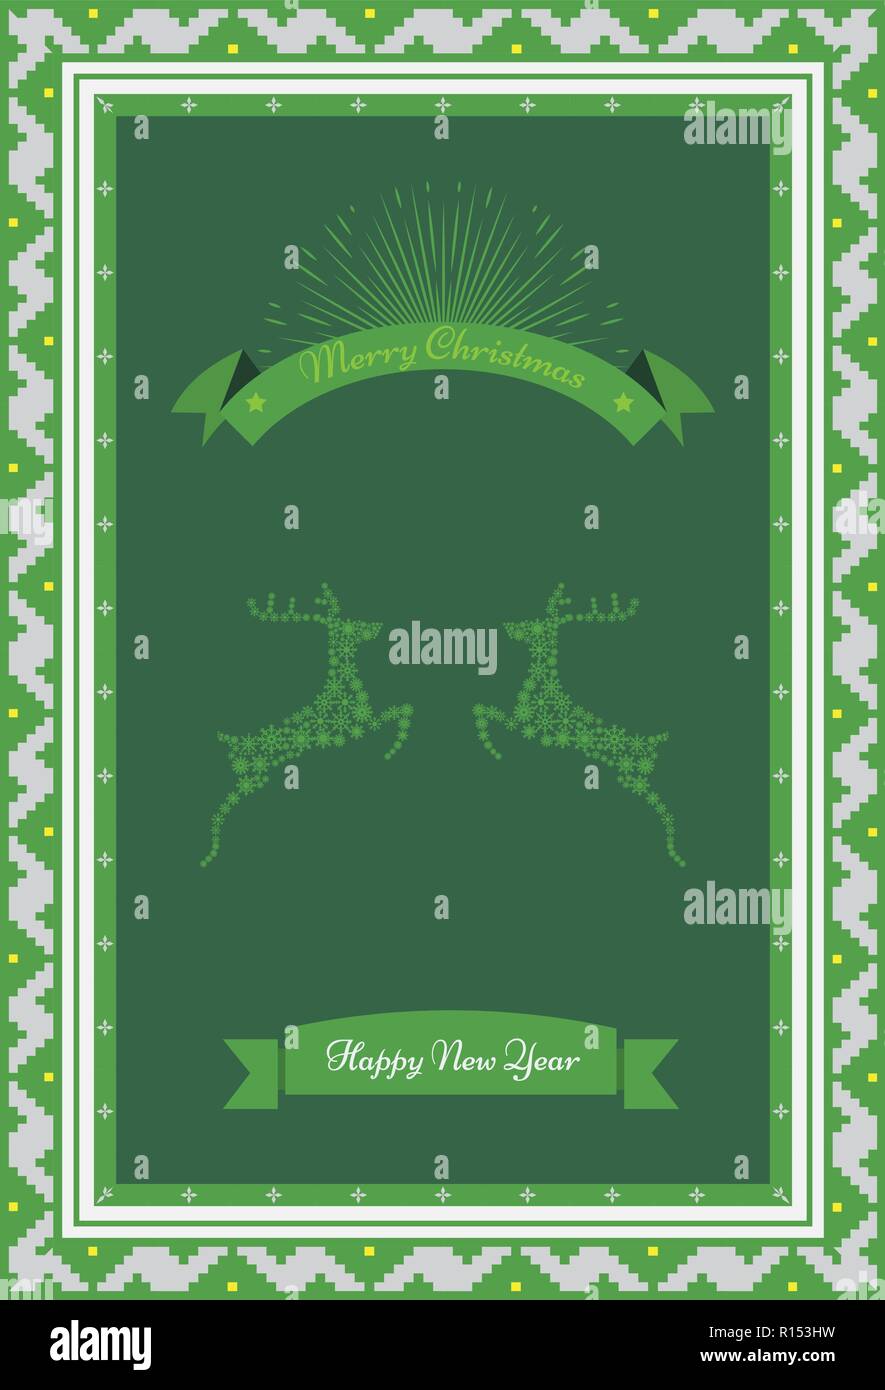 Christmas greeting card with Christmas Border and snowflake reindeer. Vector illustration. Stock Vector